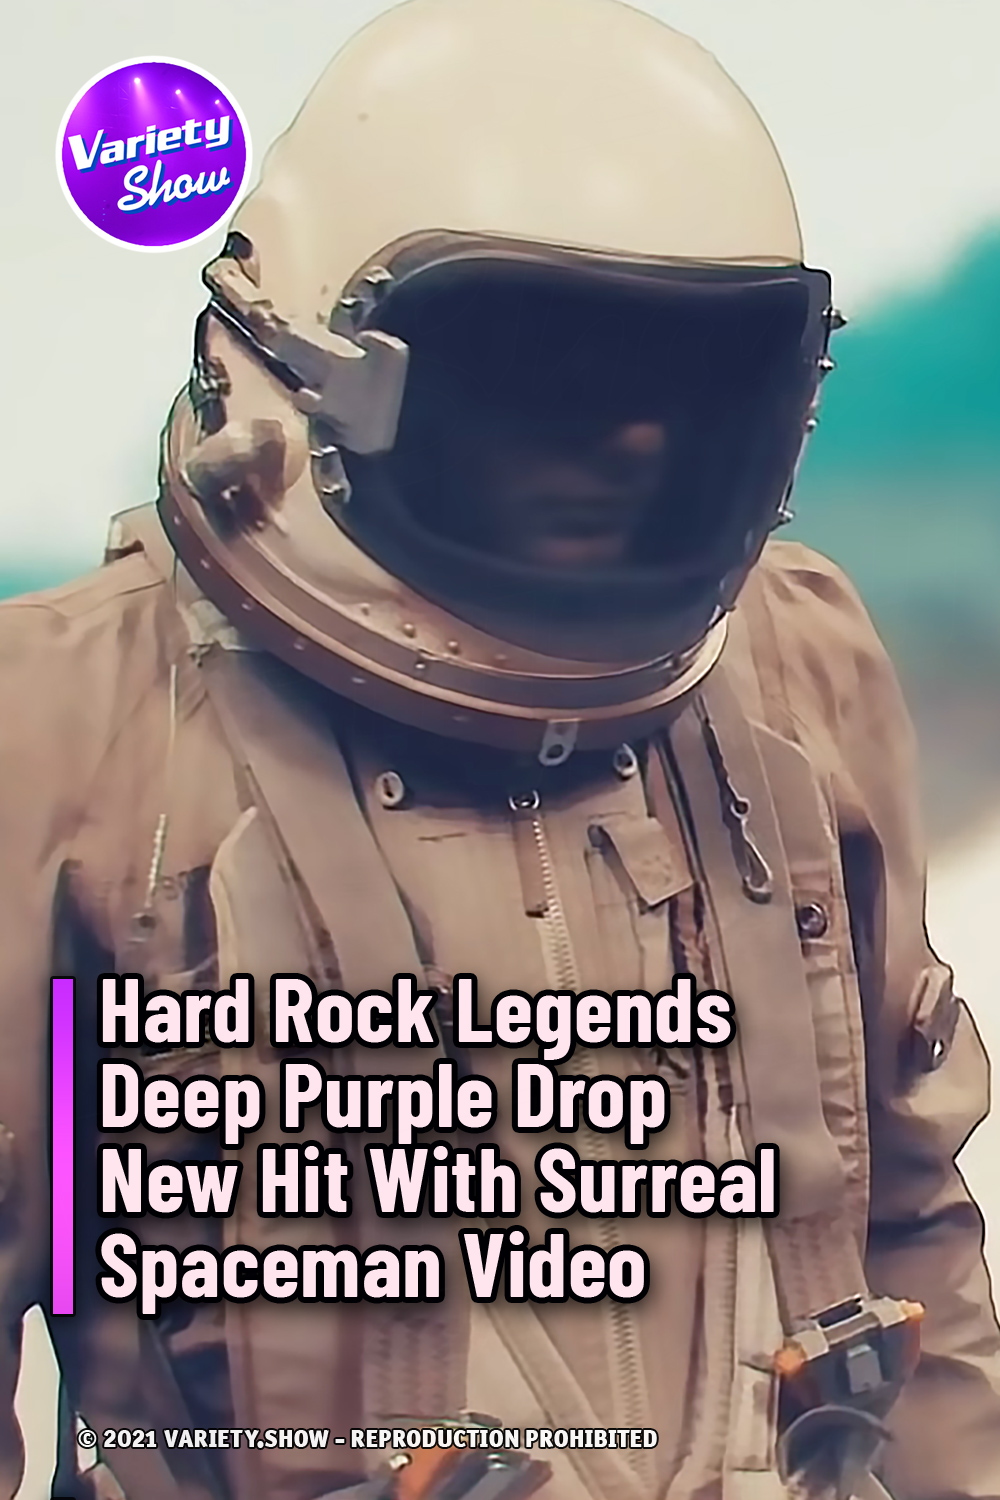 Hard Rock Legends Deep Purple Drop New Hit With Surreal Spaceman Video